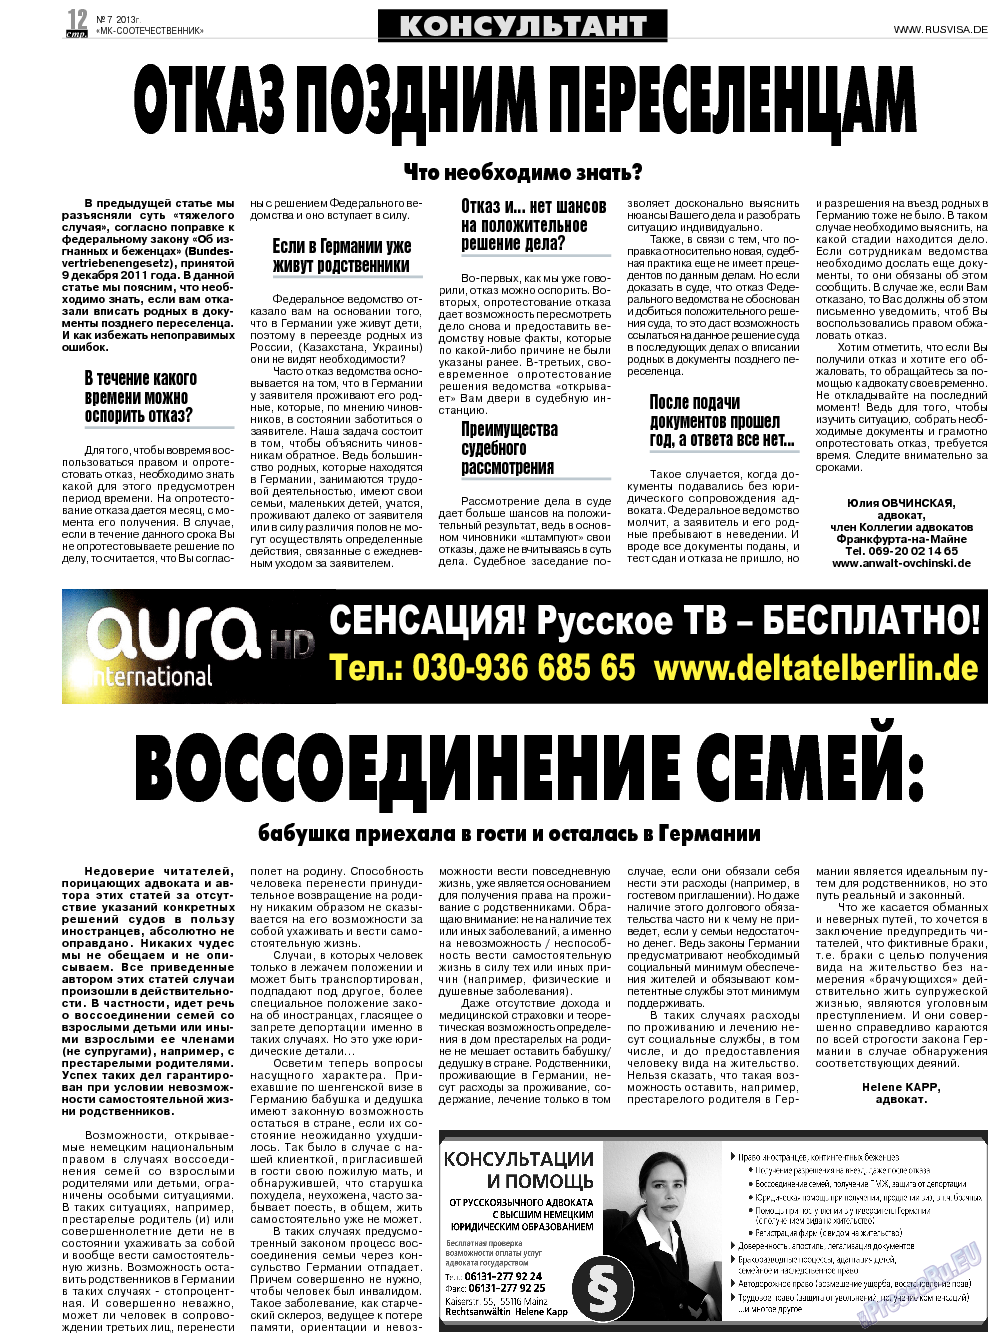 МК-Германия планета мнений, газета. 2013 №7 стр.12